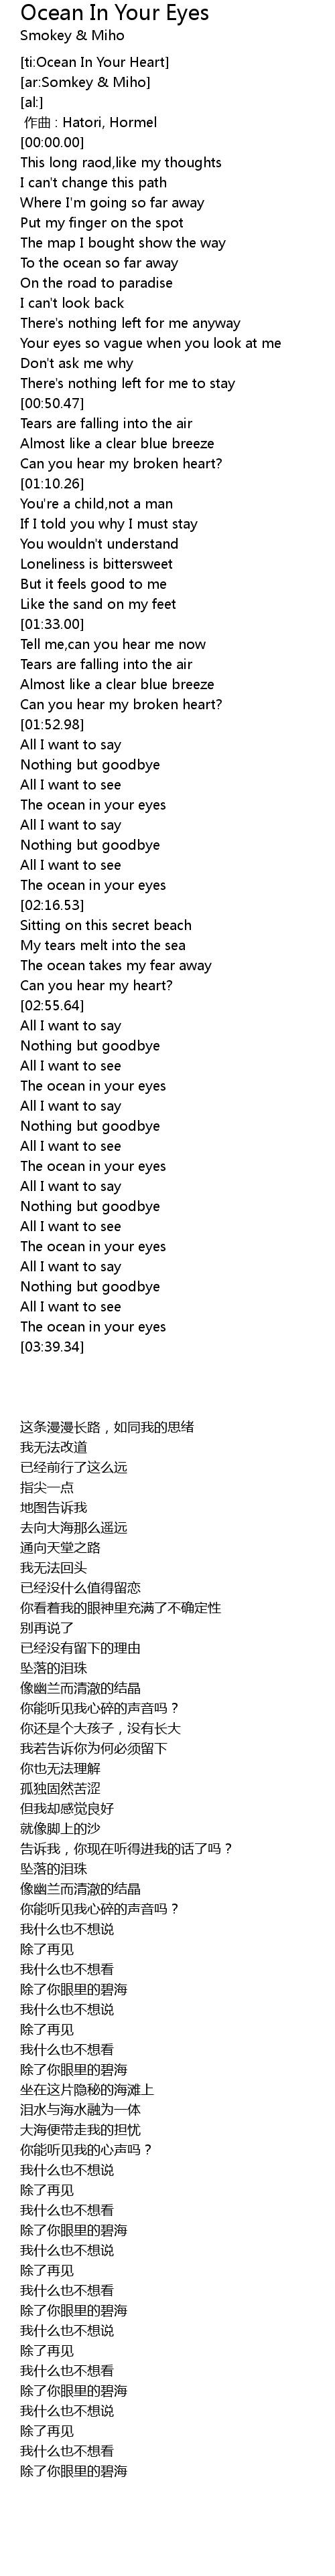 Ocean In Your Eyes Lyrics Follow Lyrics